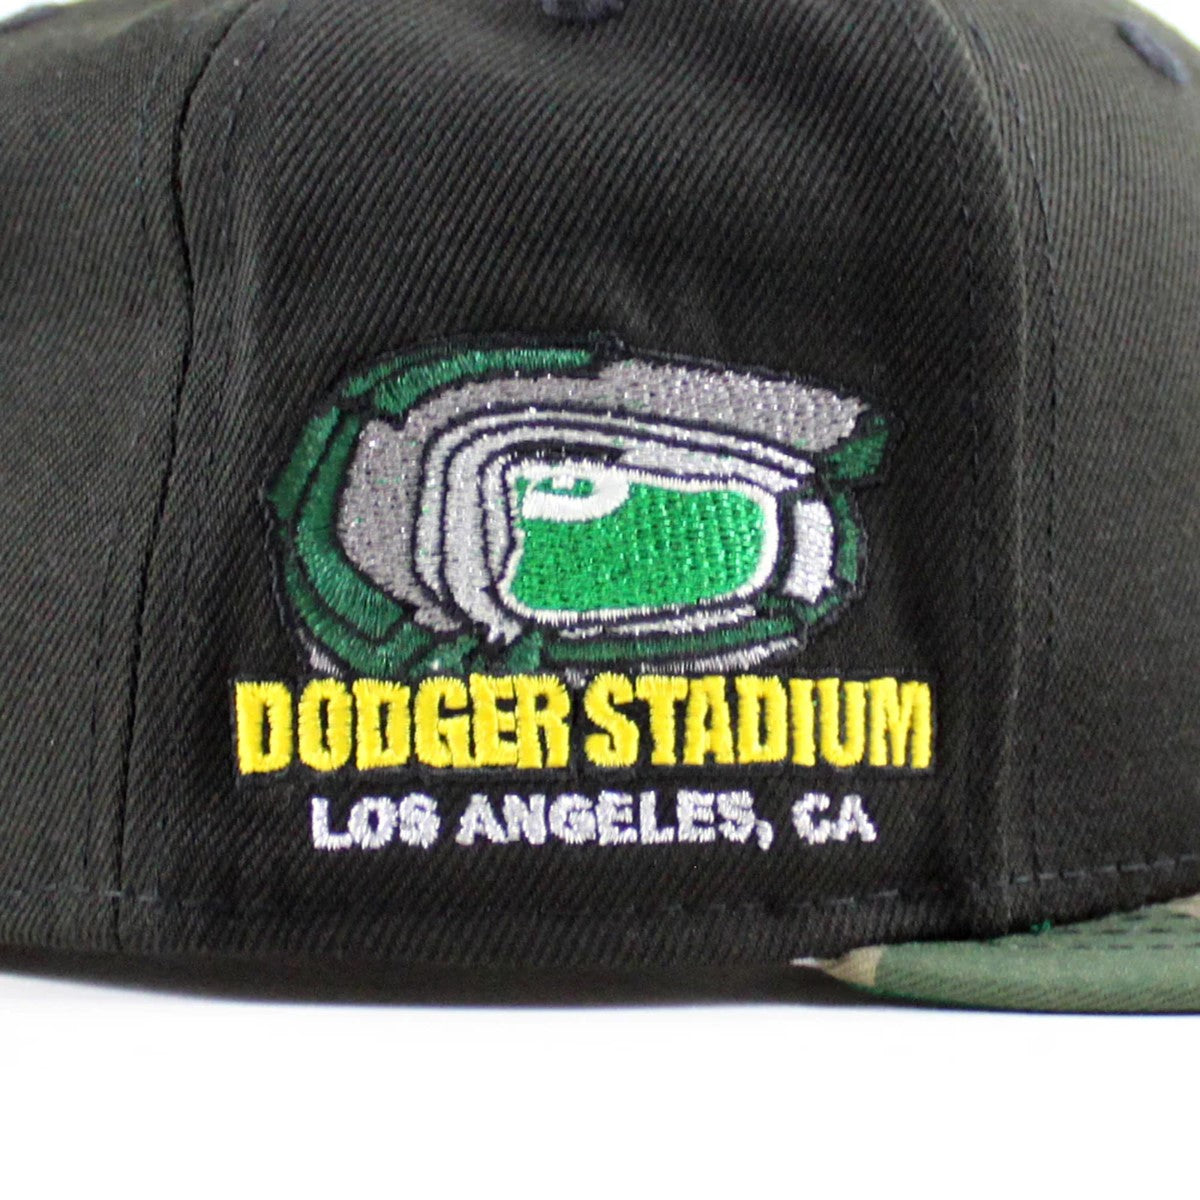 NEW ERA Los Angeles Dodgers - 59FIFTY DODGERS STADIUM BLACK/WOODLAND CAMO